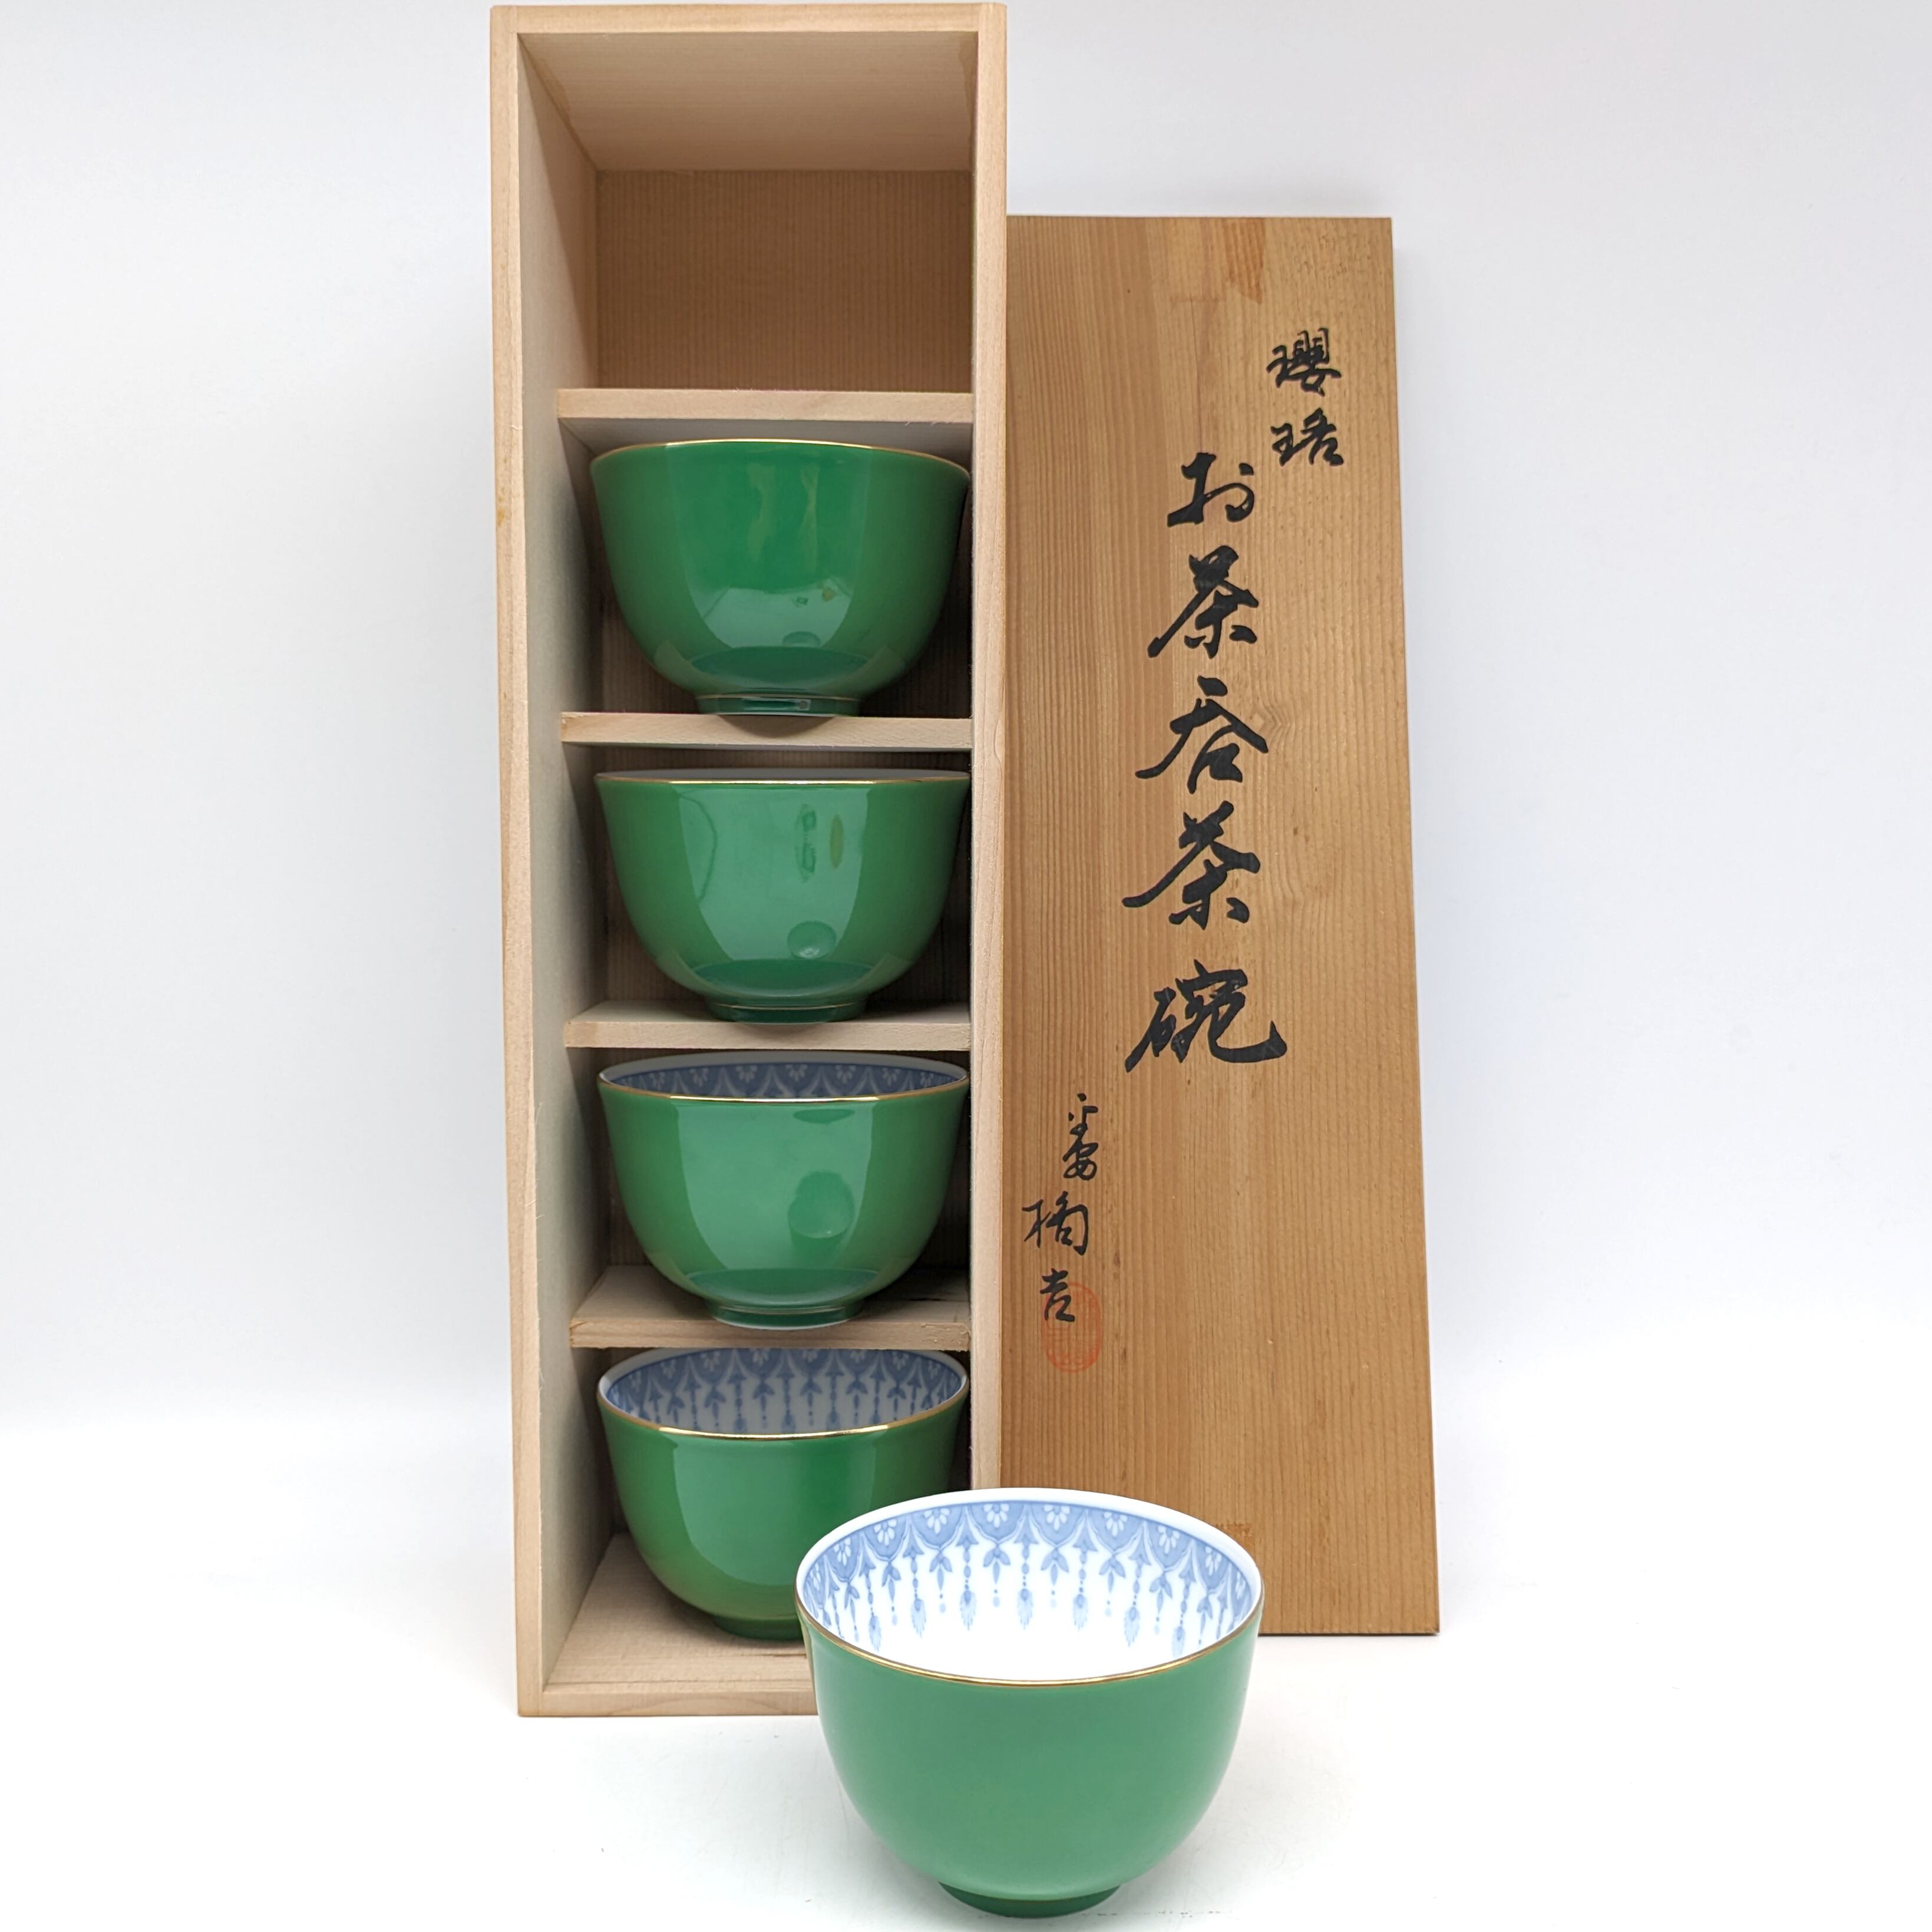 Lサイズ】抹茶 茶 日本茶 GREEN TEA 看板 置物 雑貨 ライトBOX